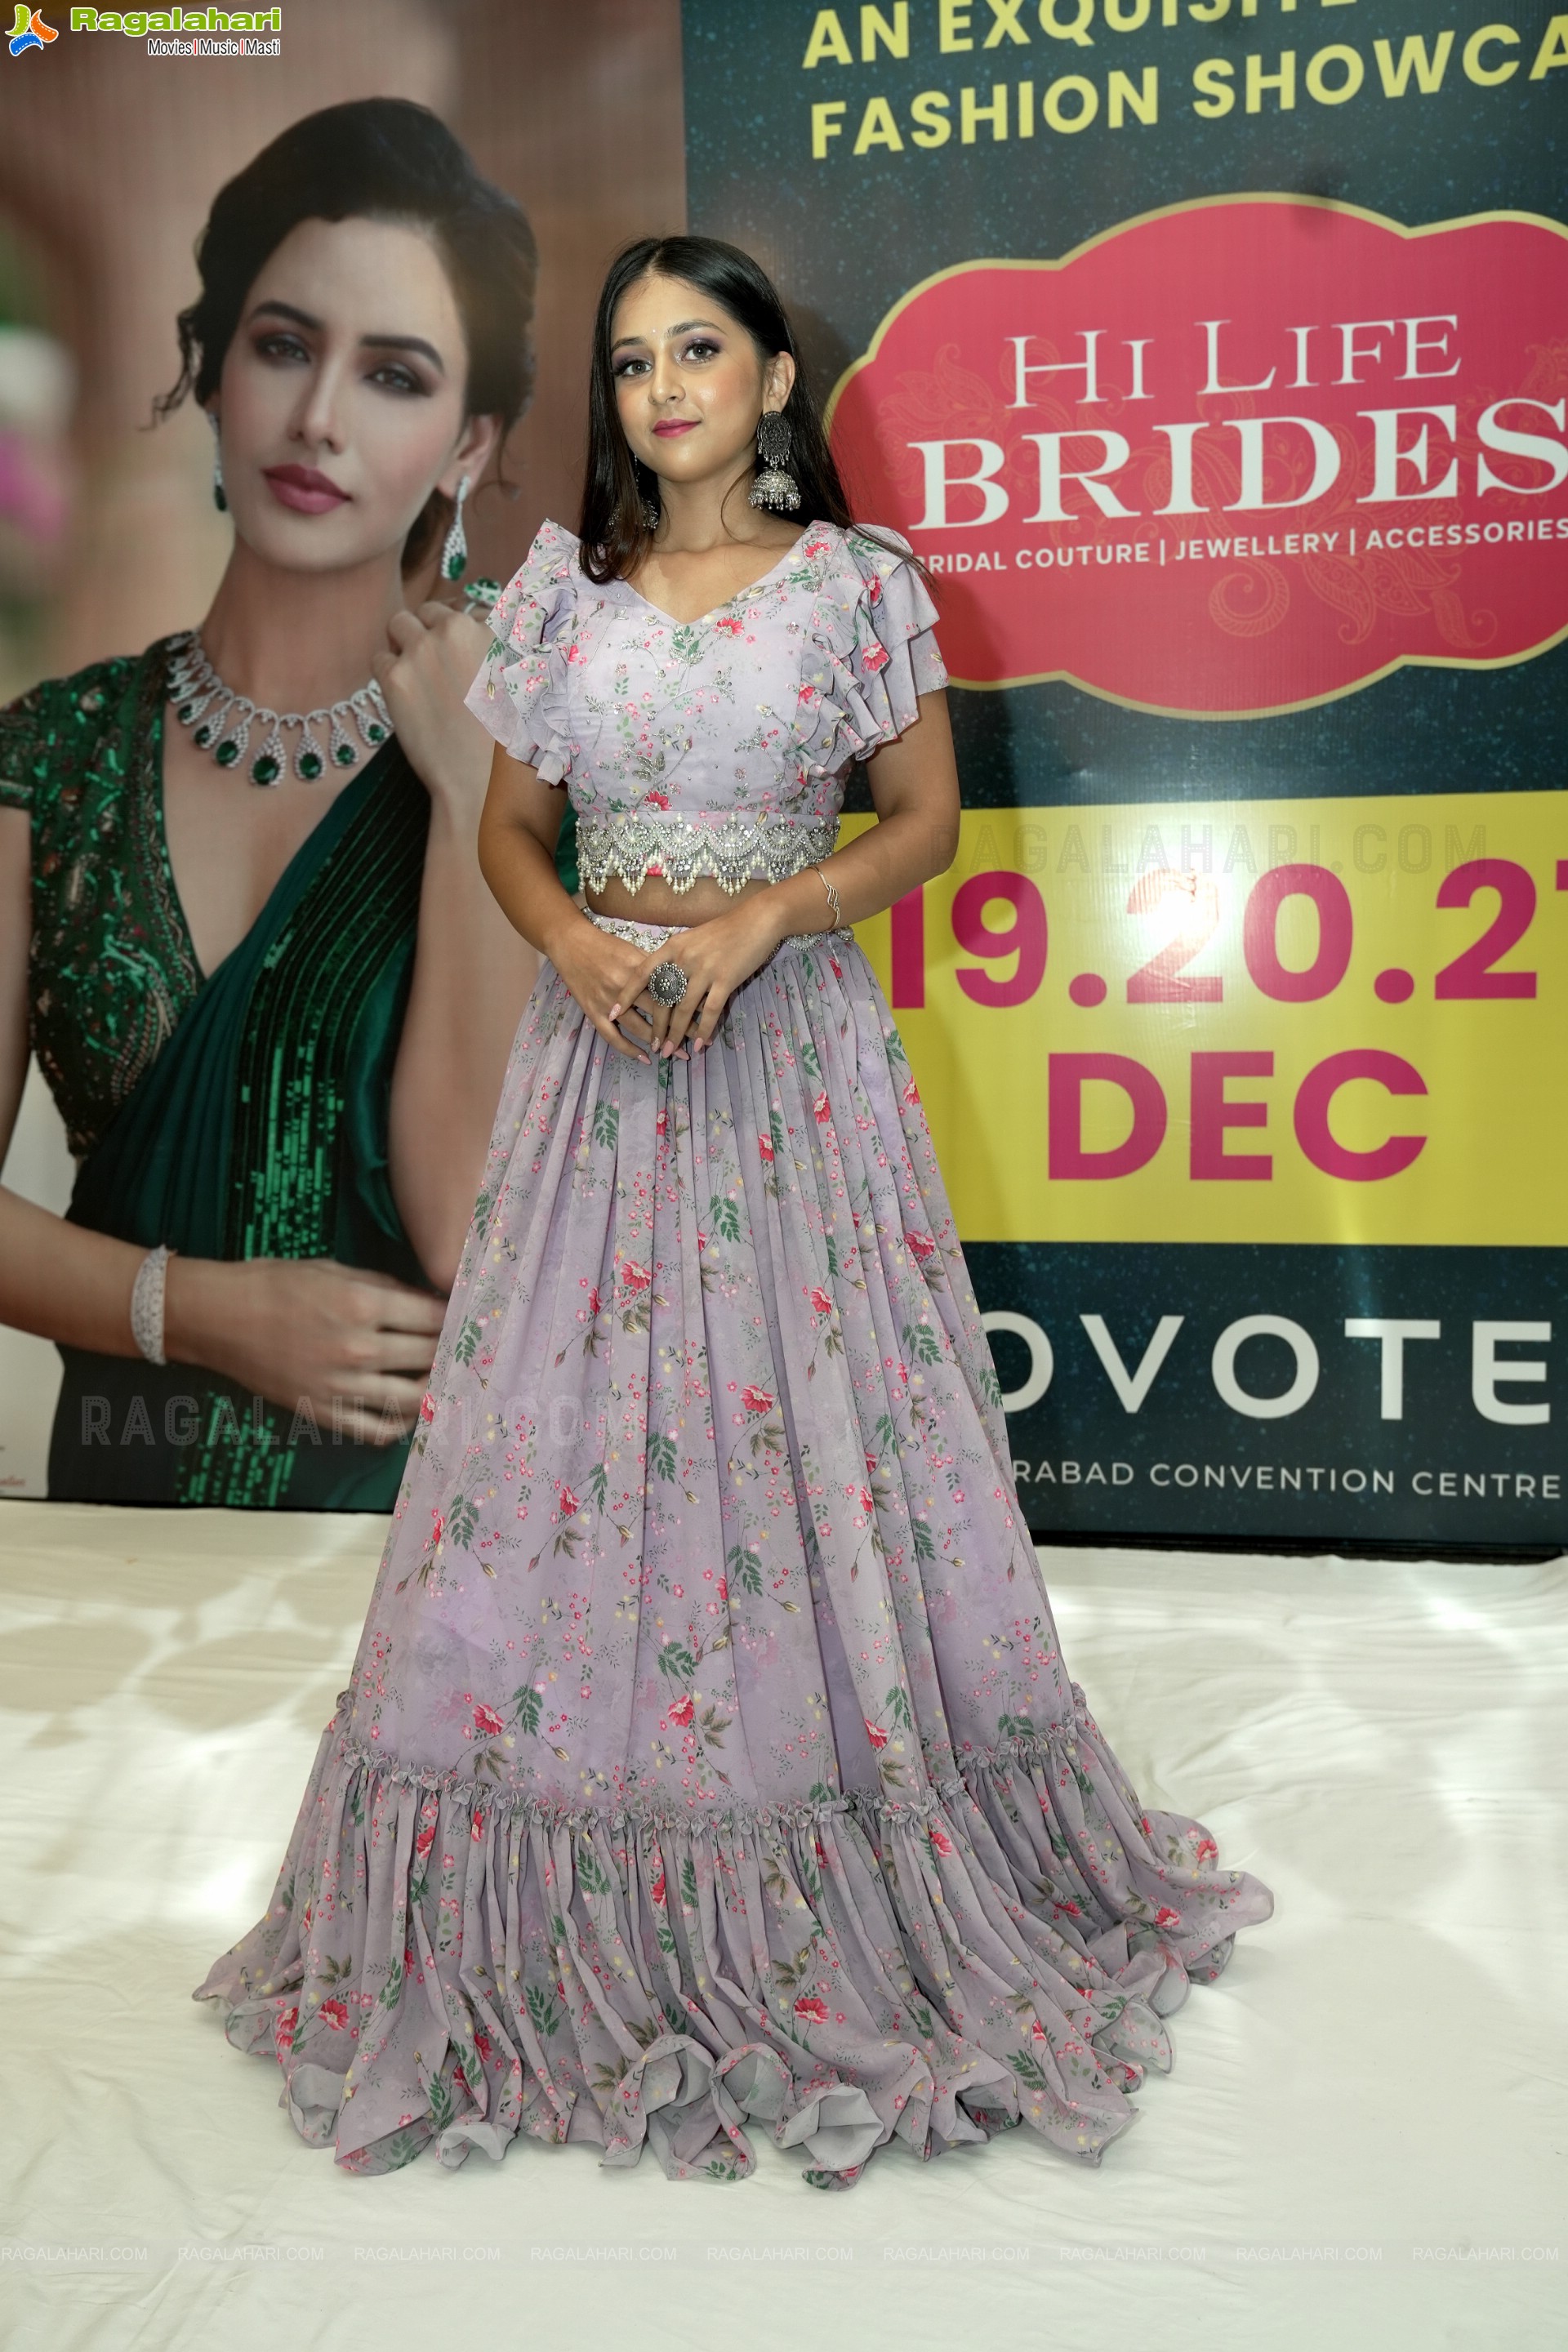 Hi Life Brides Exhibition December 2022 Announcement and Fashion Show